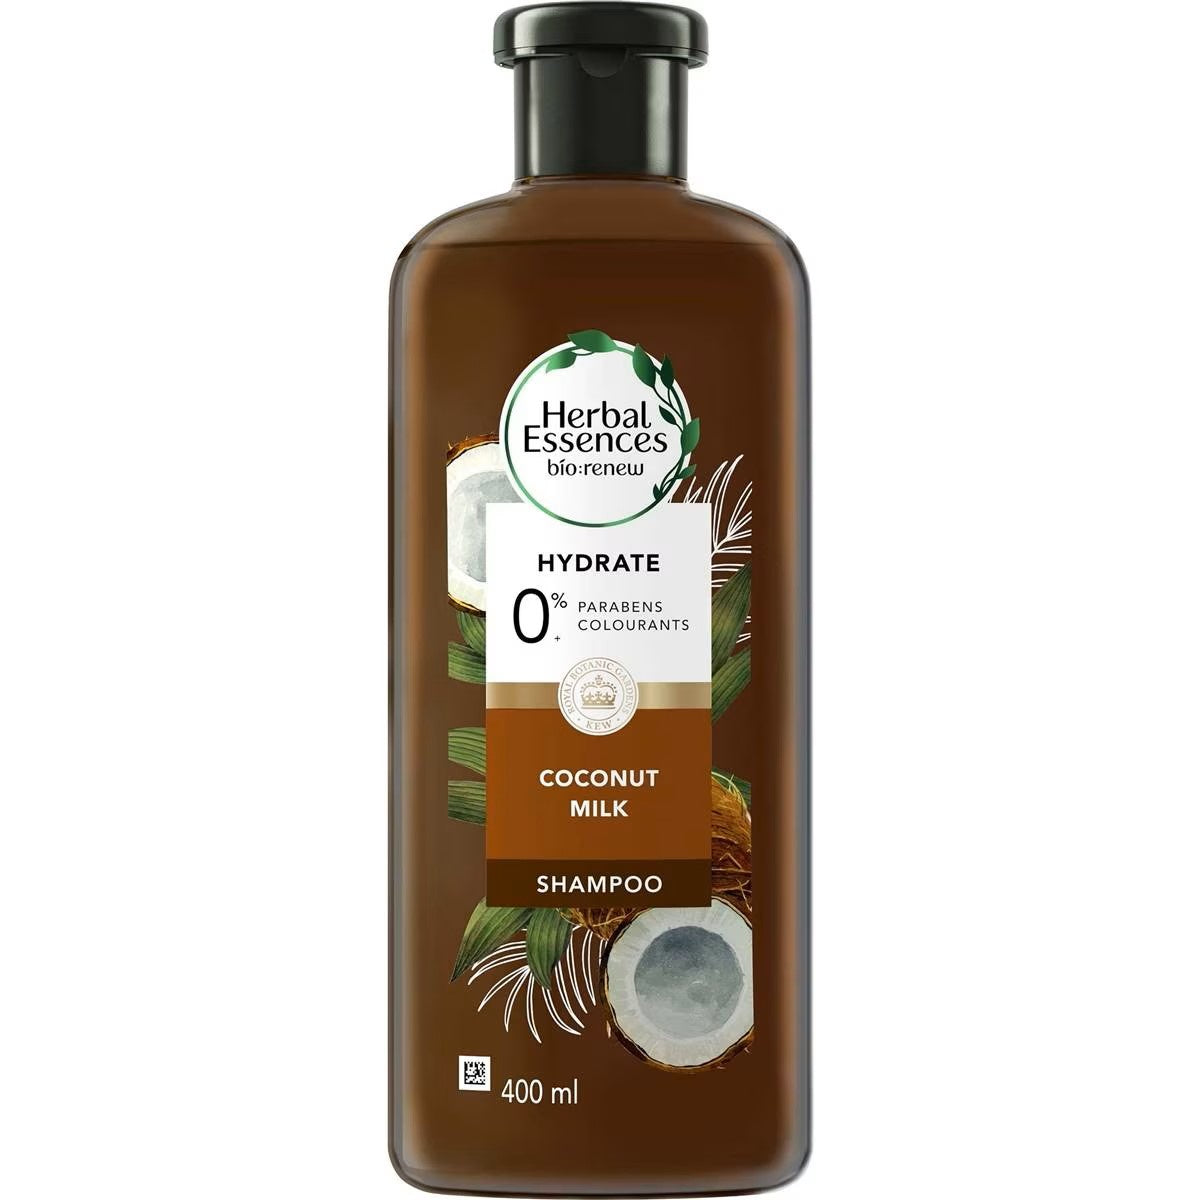 Herbal Essence Hydrate Coconut Milk Shampoo 400mL